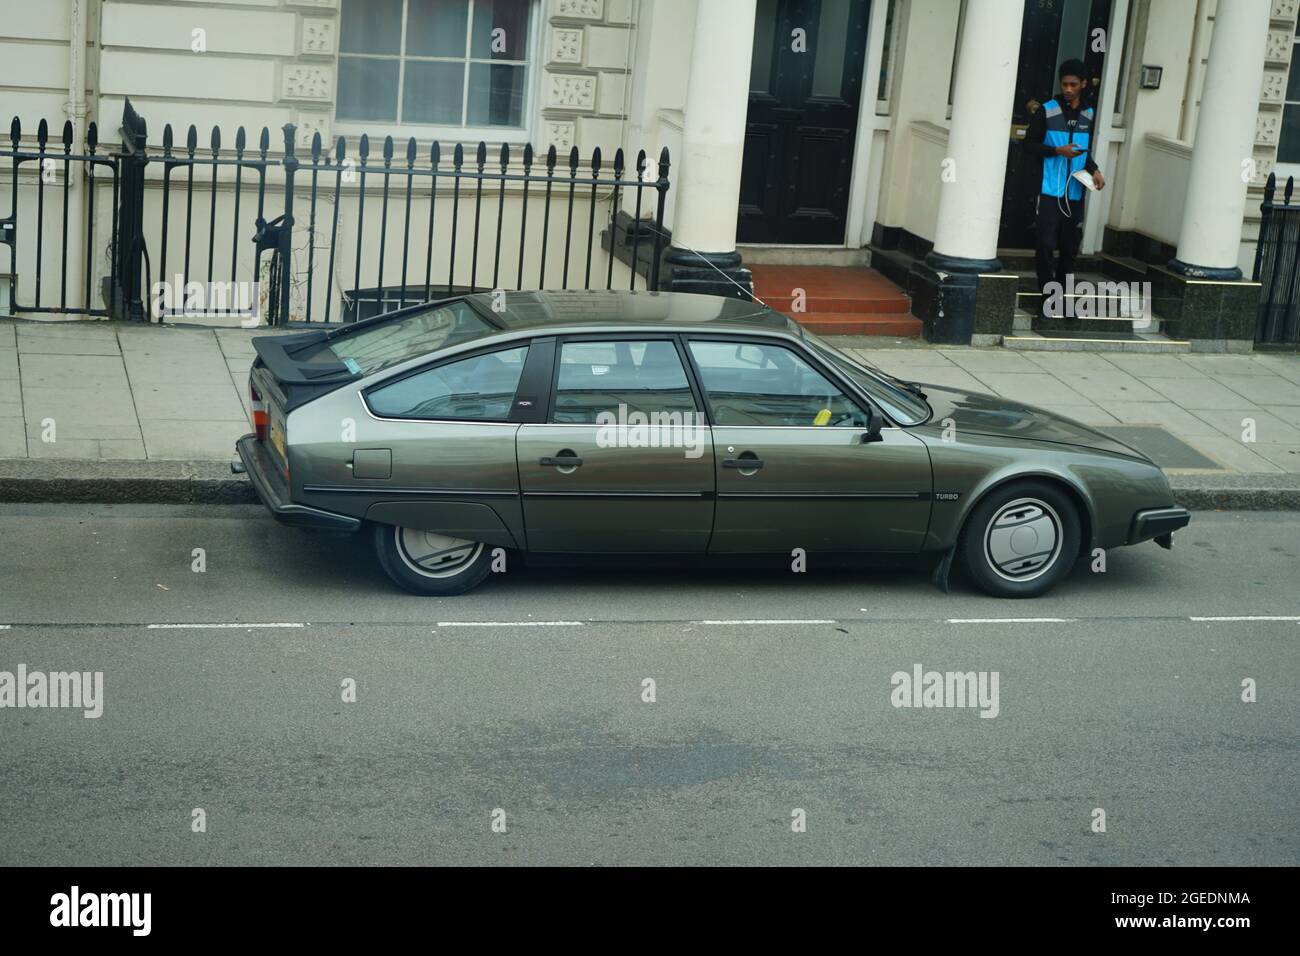 A vintage Citroen CX parked on a London street Stock Photo